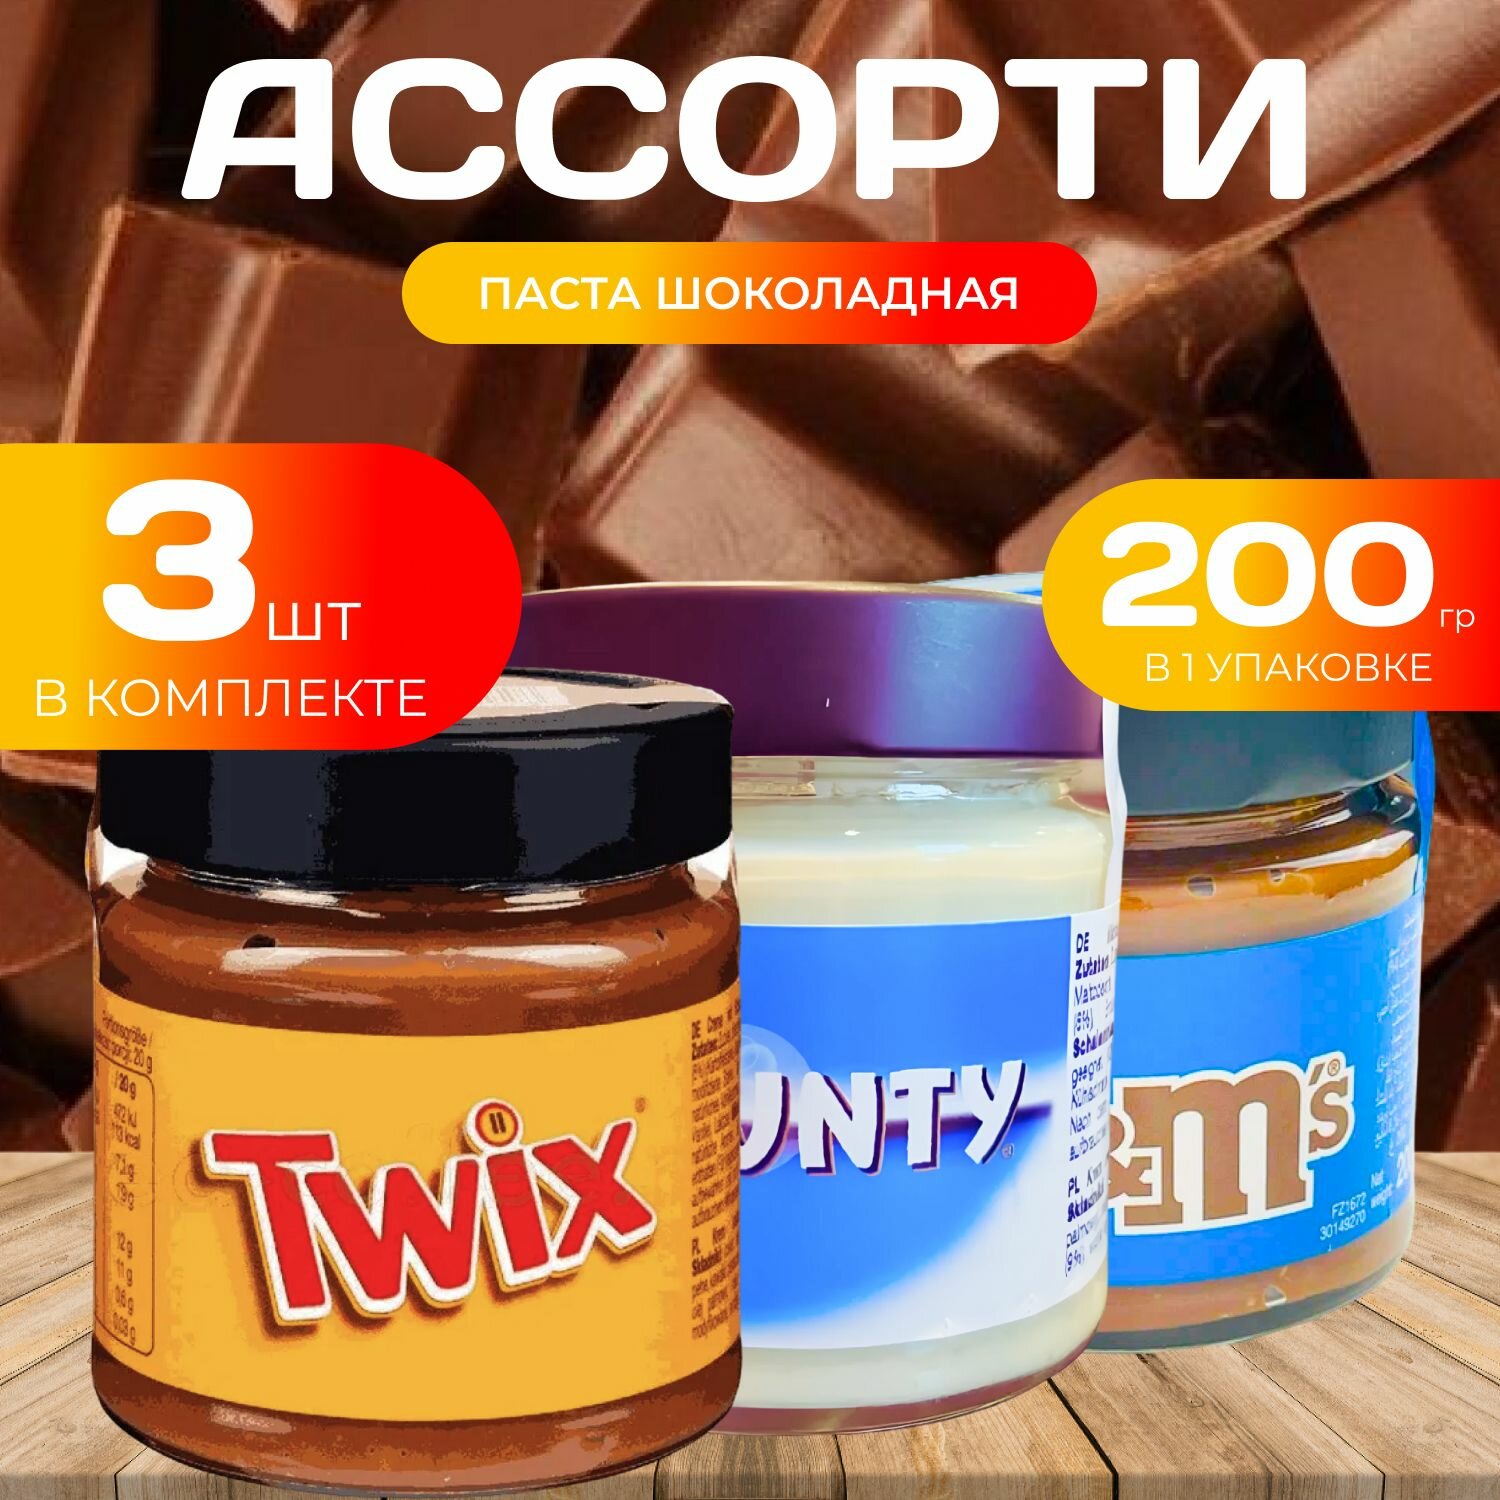 Ассорти Шоколадная паста 200 гр. (3 шт.) Баунти / Твикс / M&Ms